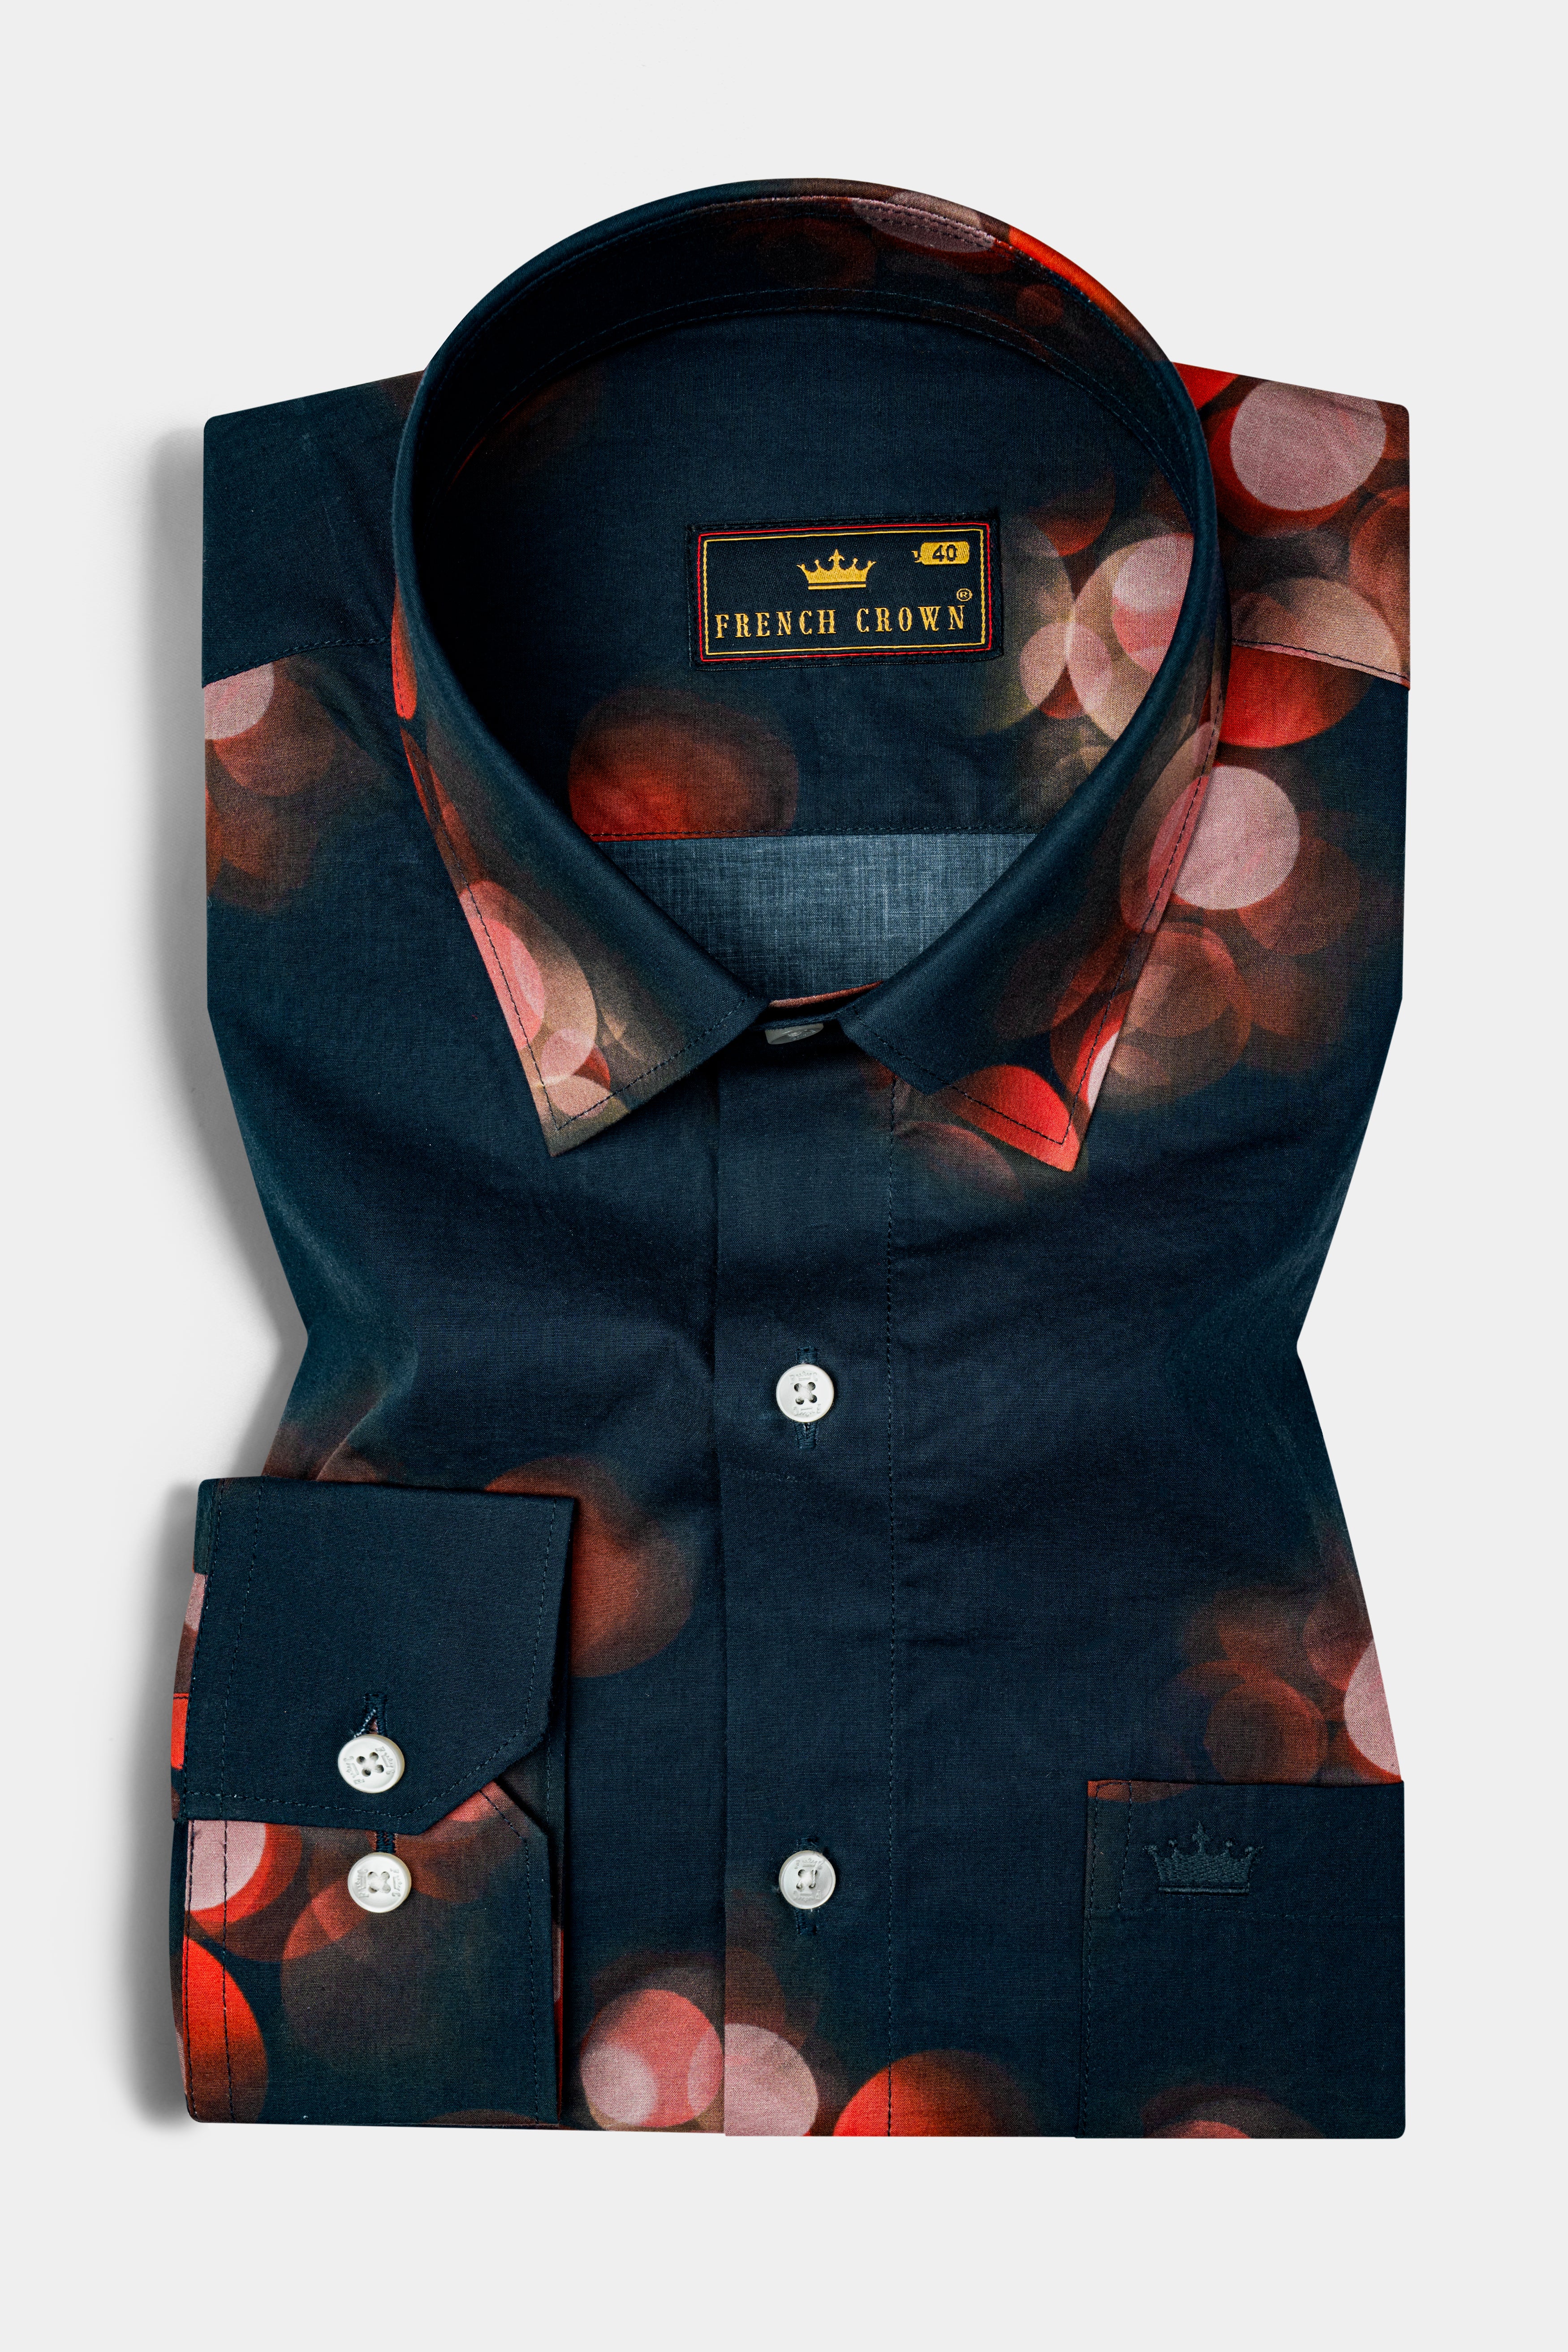 Ebony Clay Black 3-D Printed Super Soft Premium Cotton Shirt